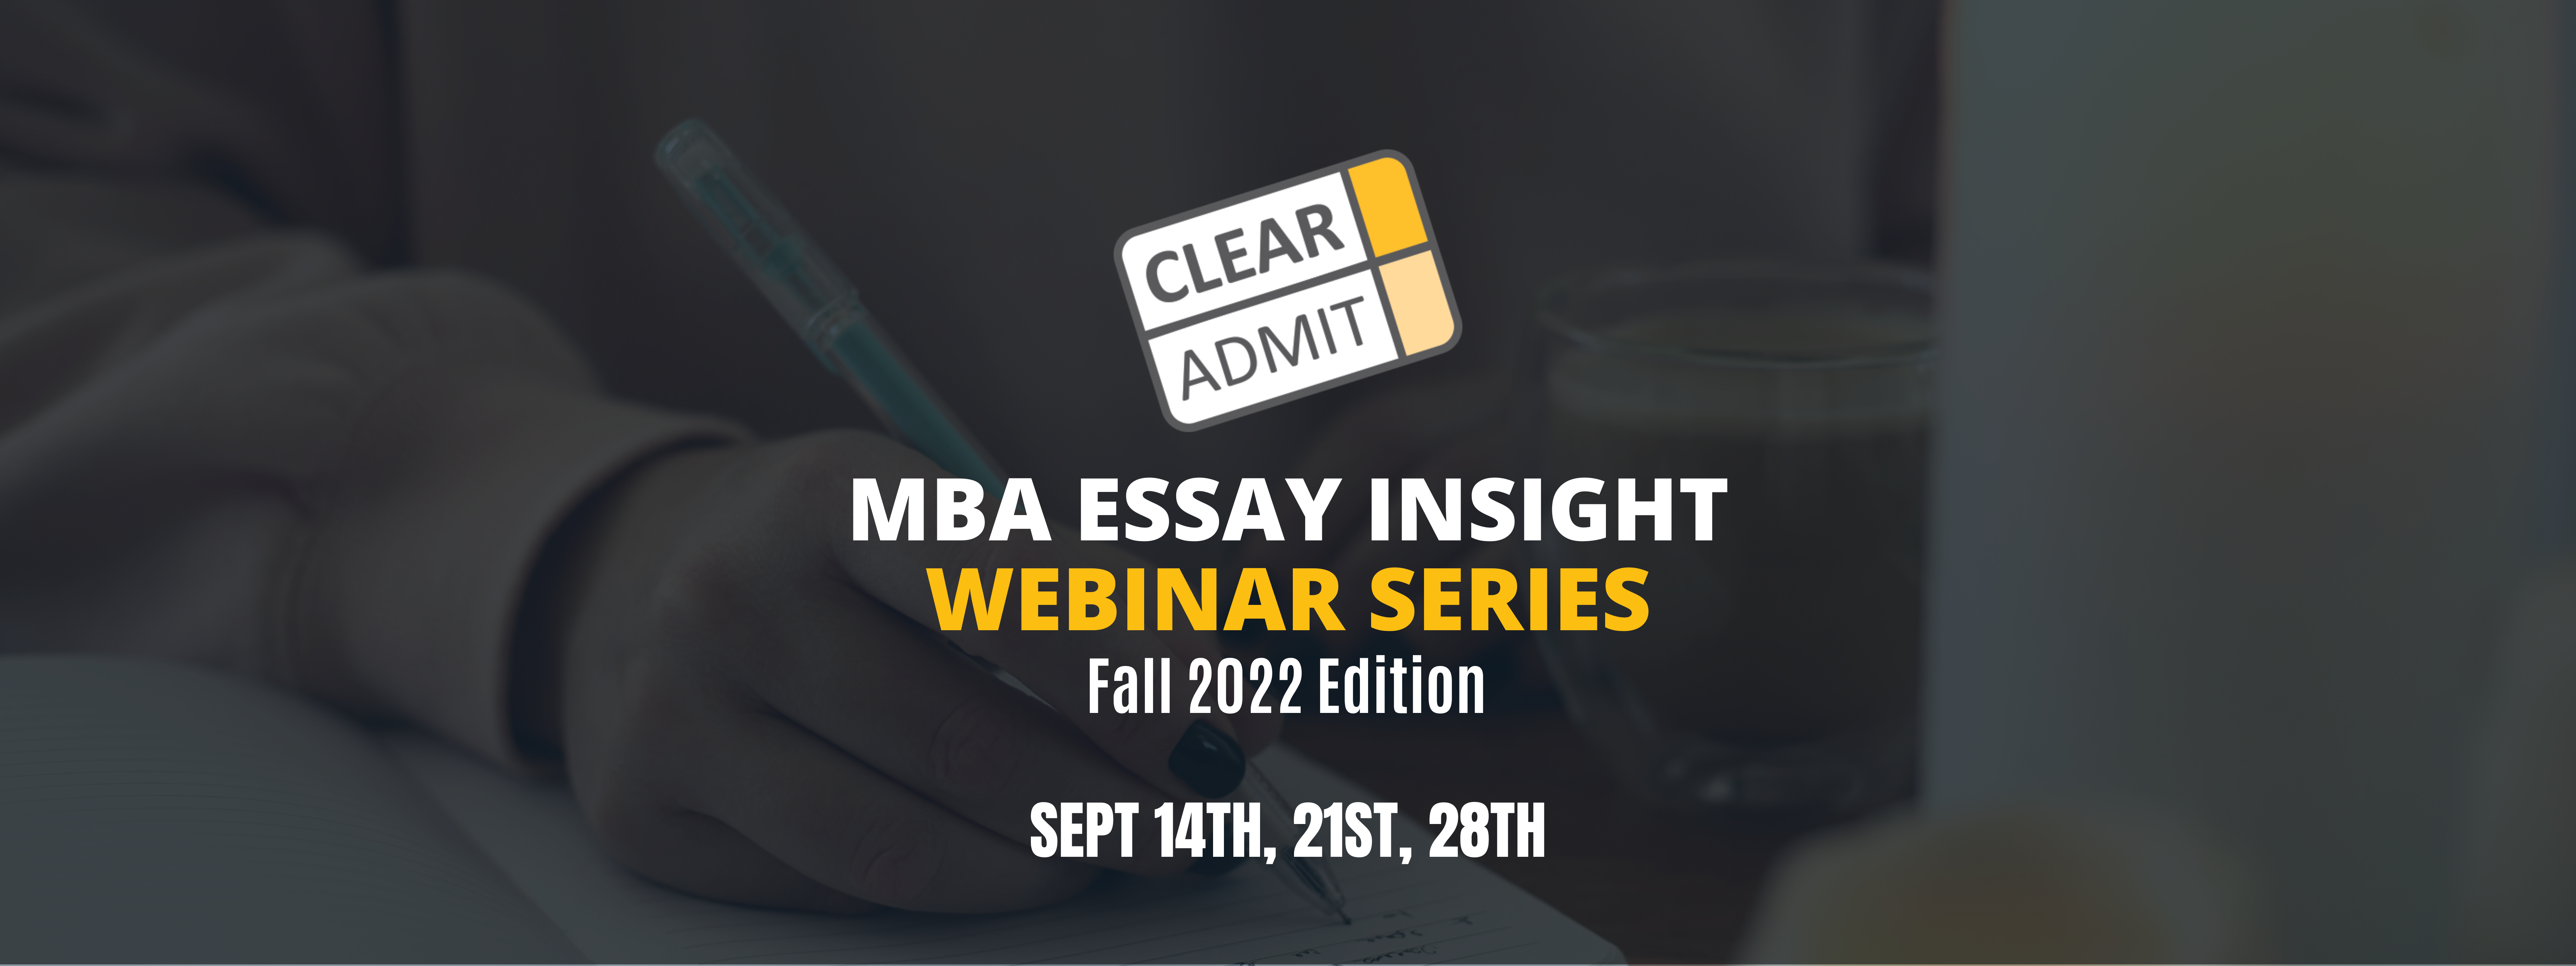 Image for MBA Essay Insight Webinar Series Fall 2022